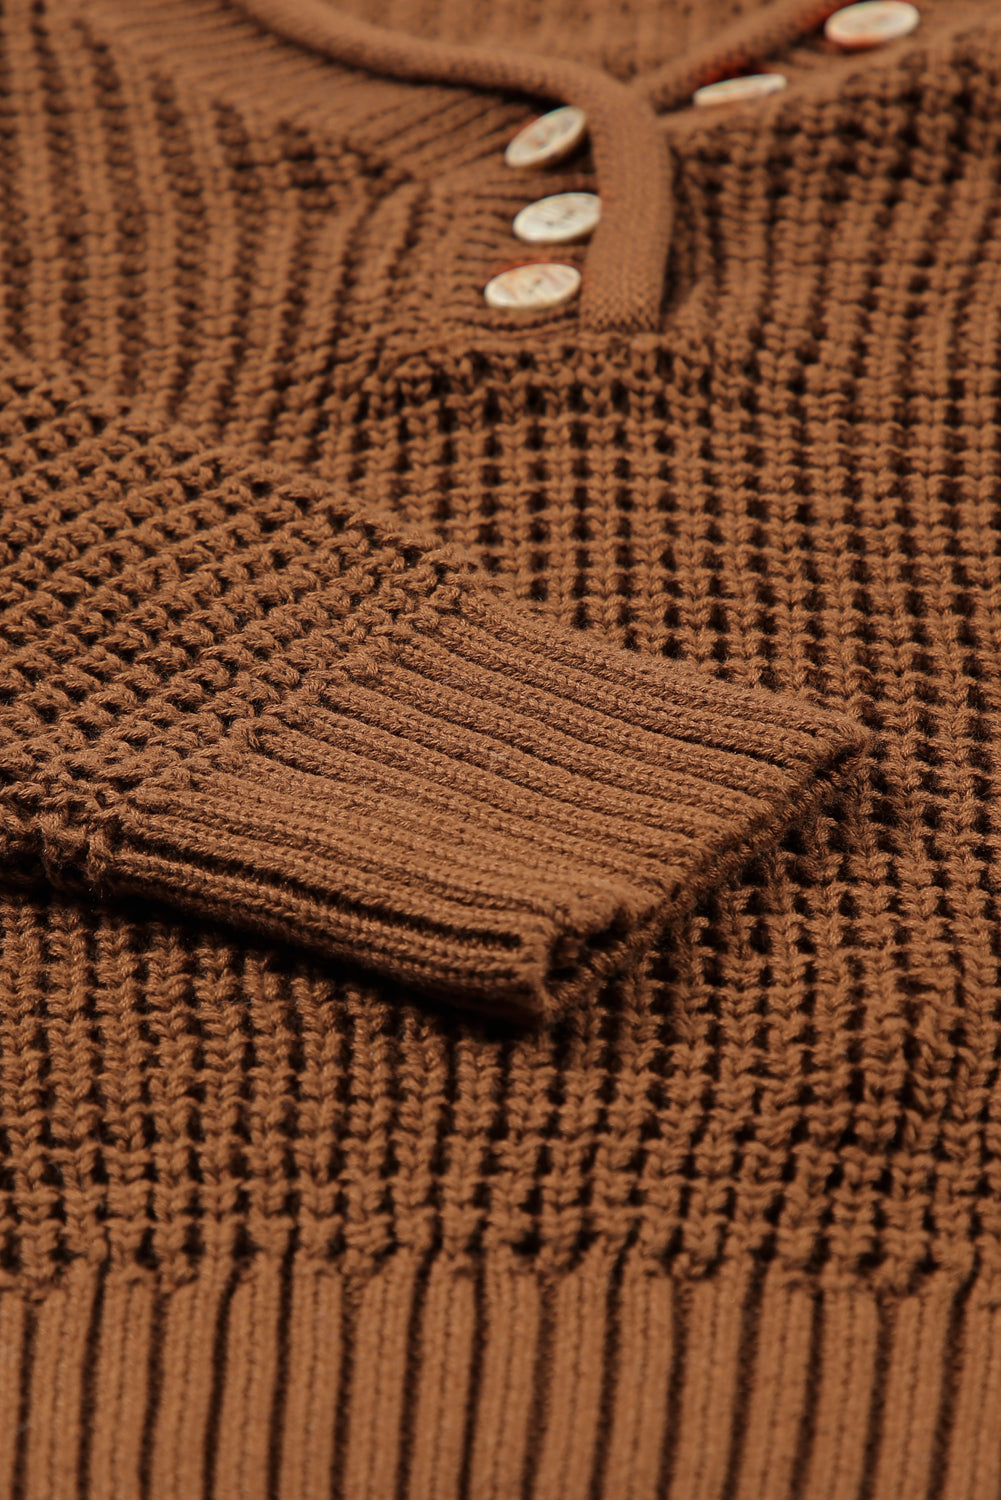 Black Pointelle Knit Button V Neck Drop Shoulder Sweater